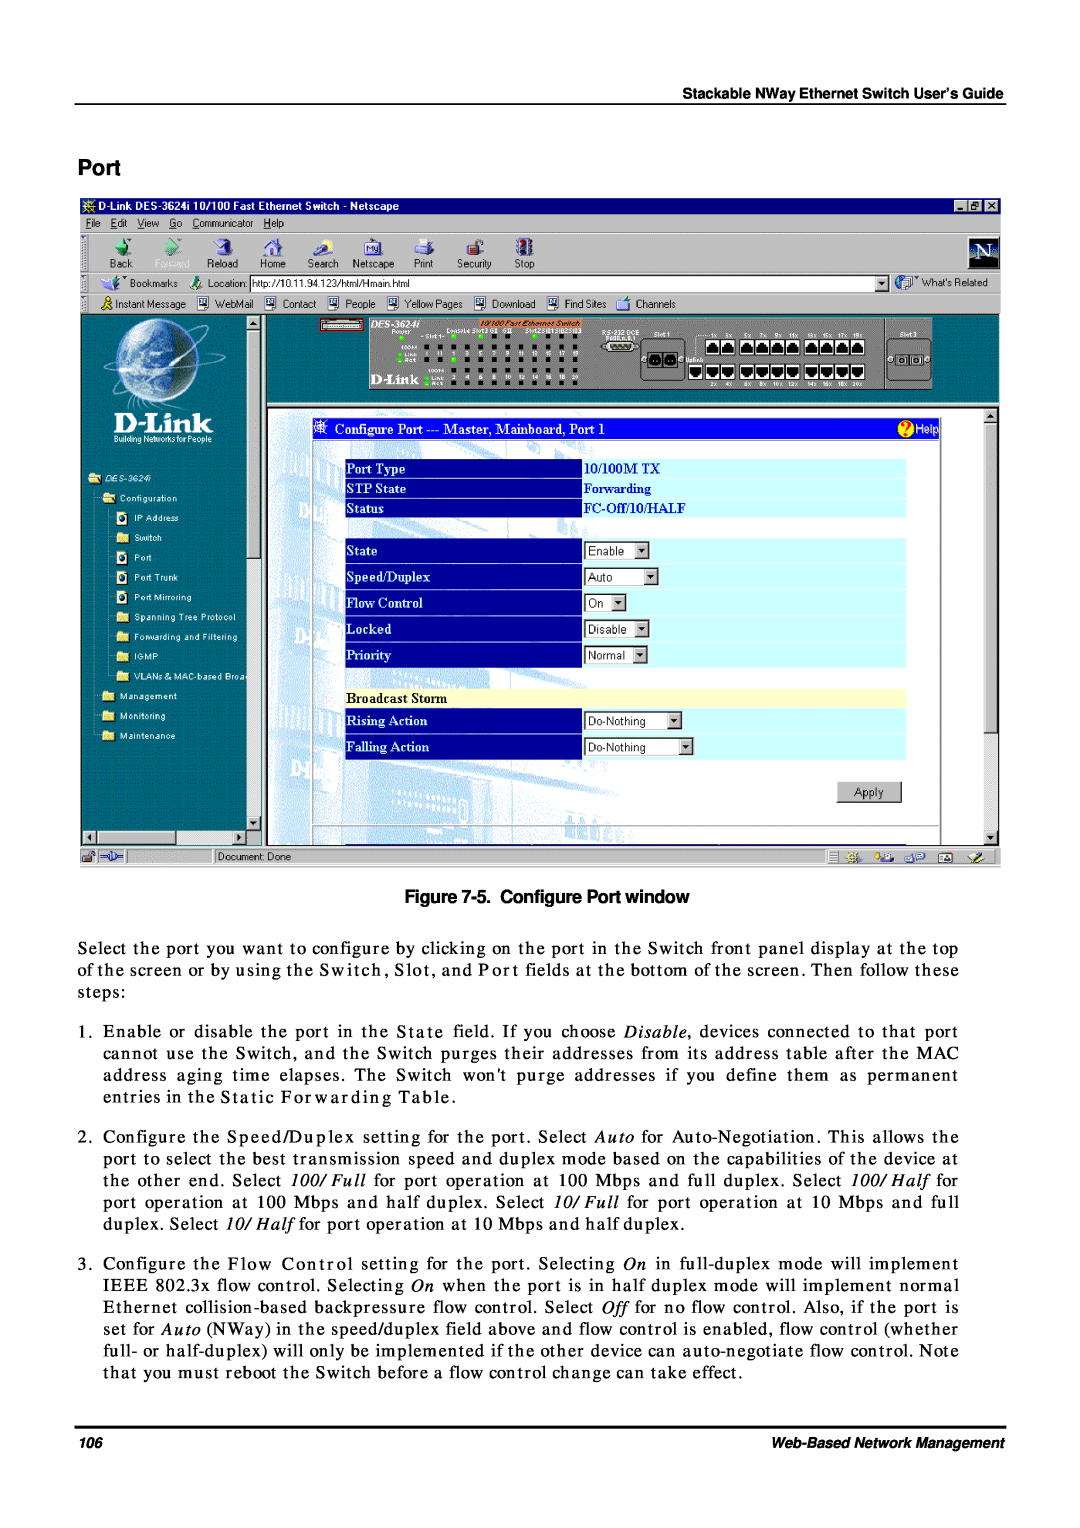 D-Link DES-3624 manual 5. Configure Port window 